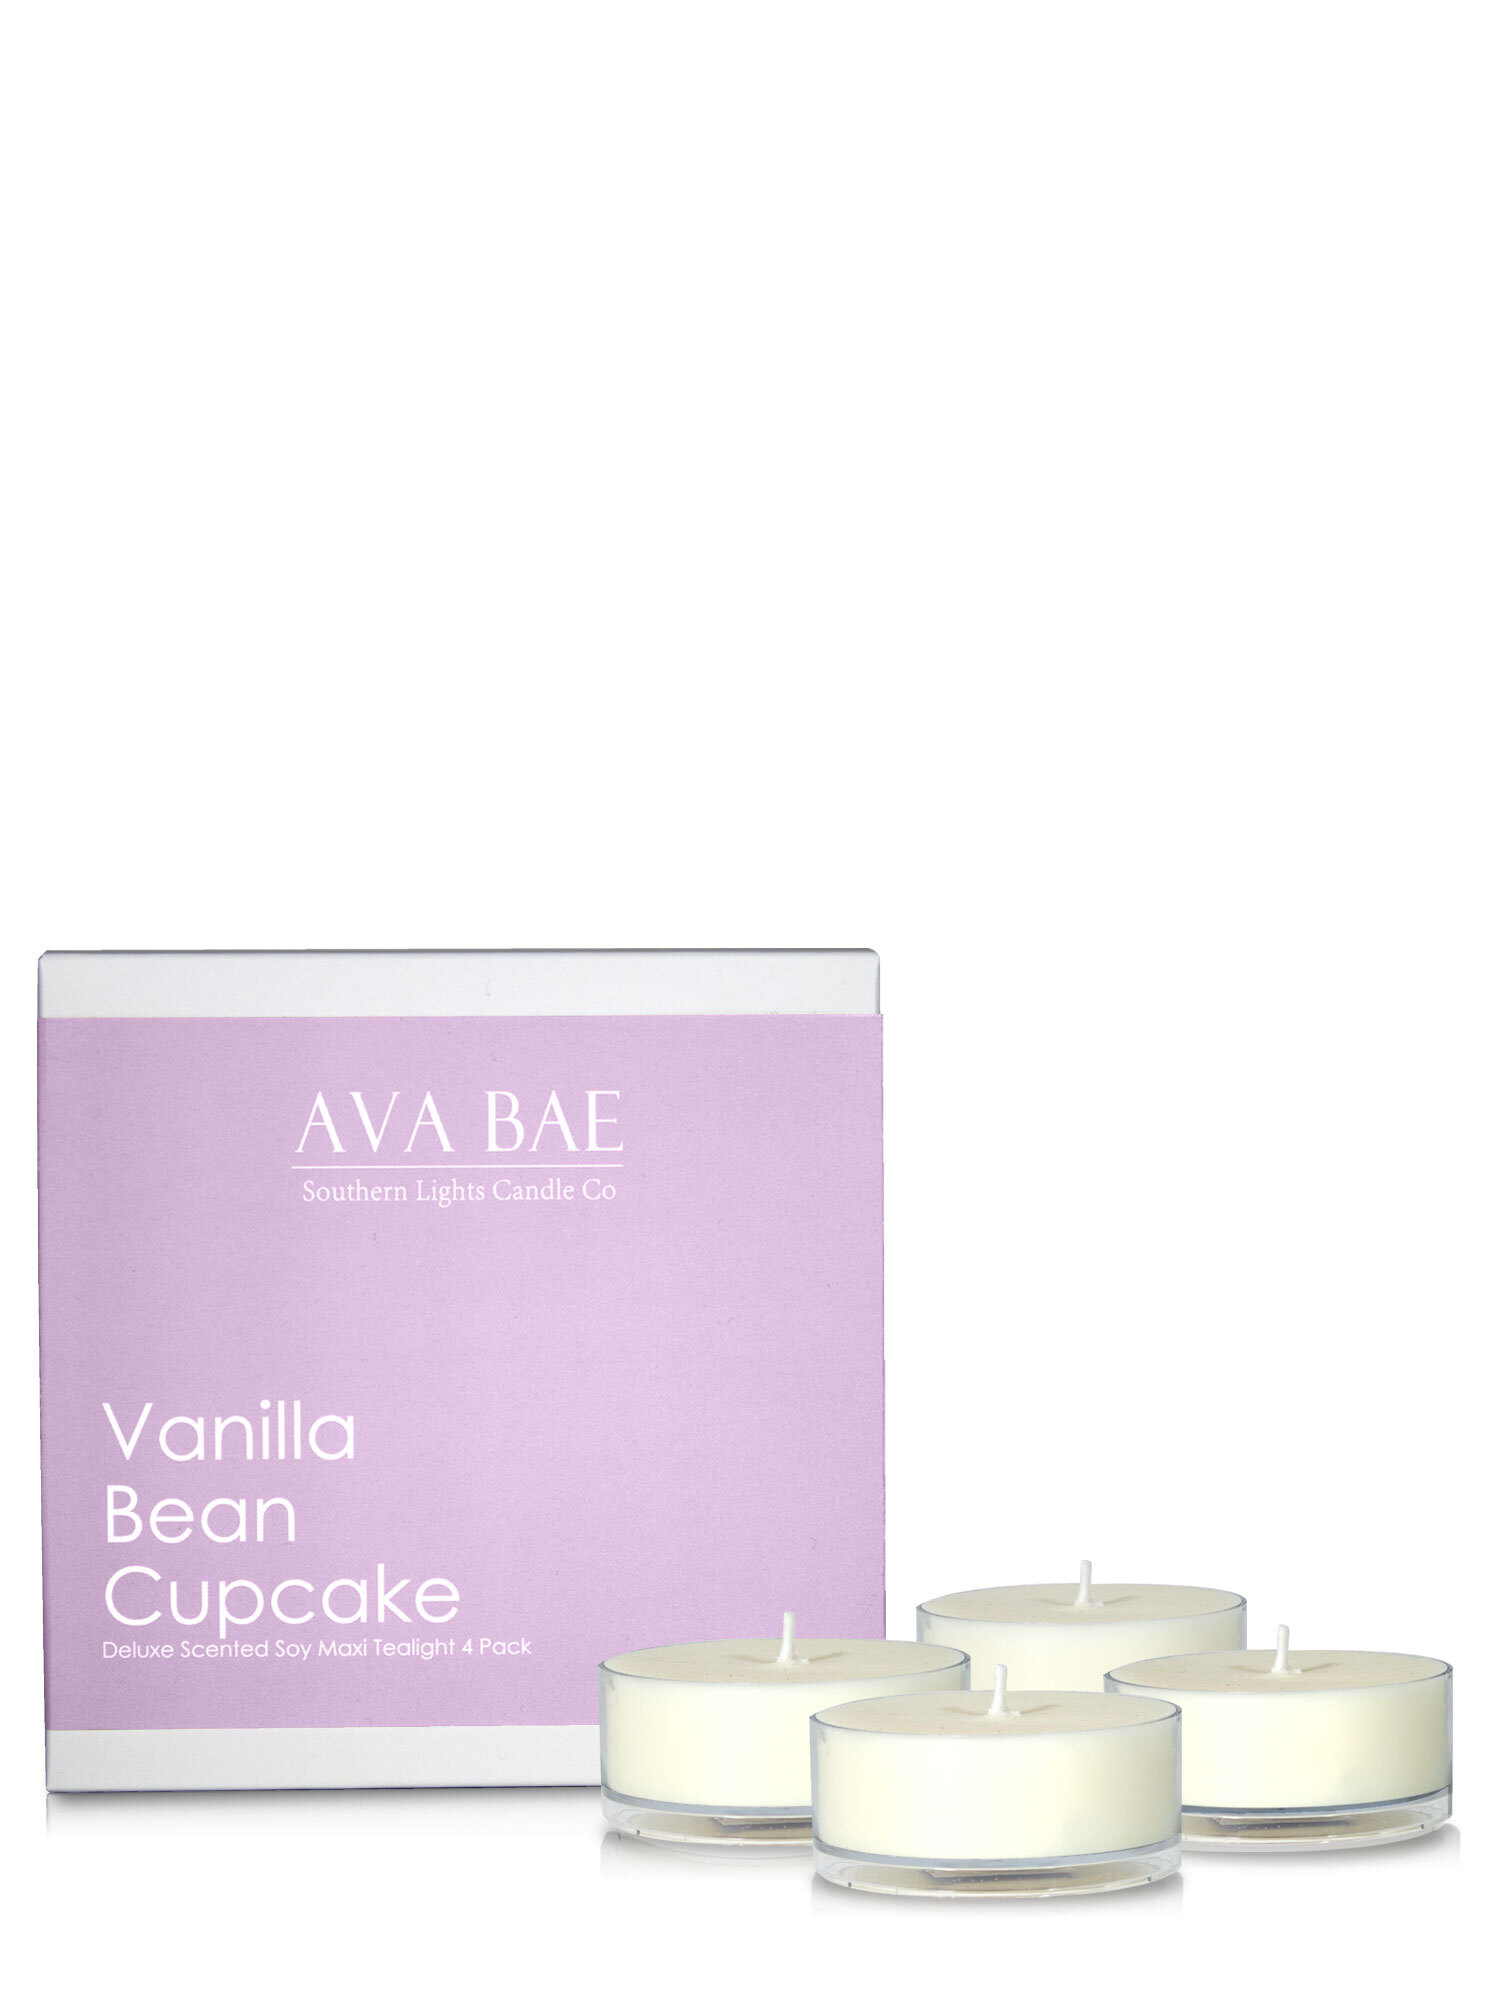 Ava Bae Soy Maxi Tealight Pack - Vanilla Bean Cupcake